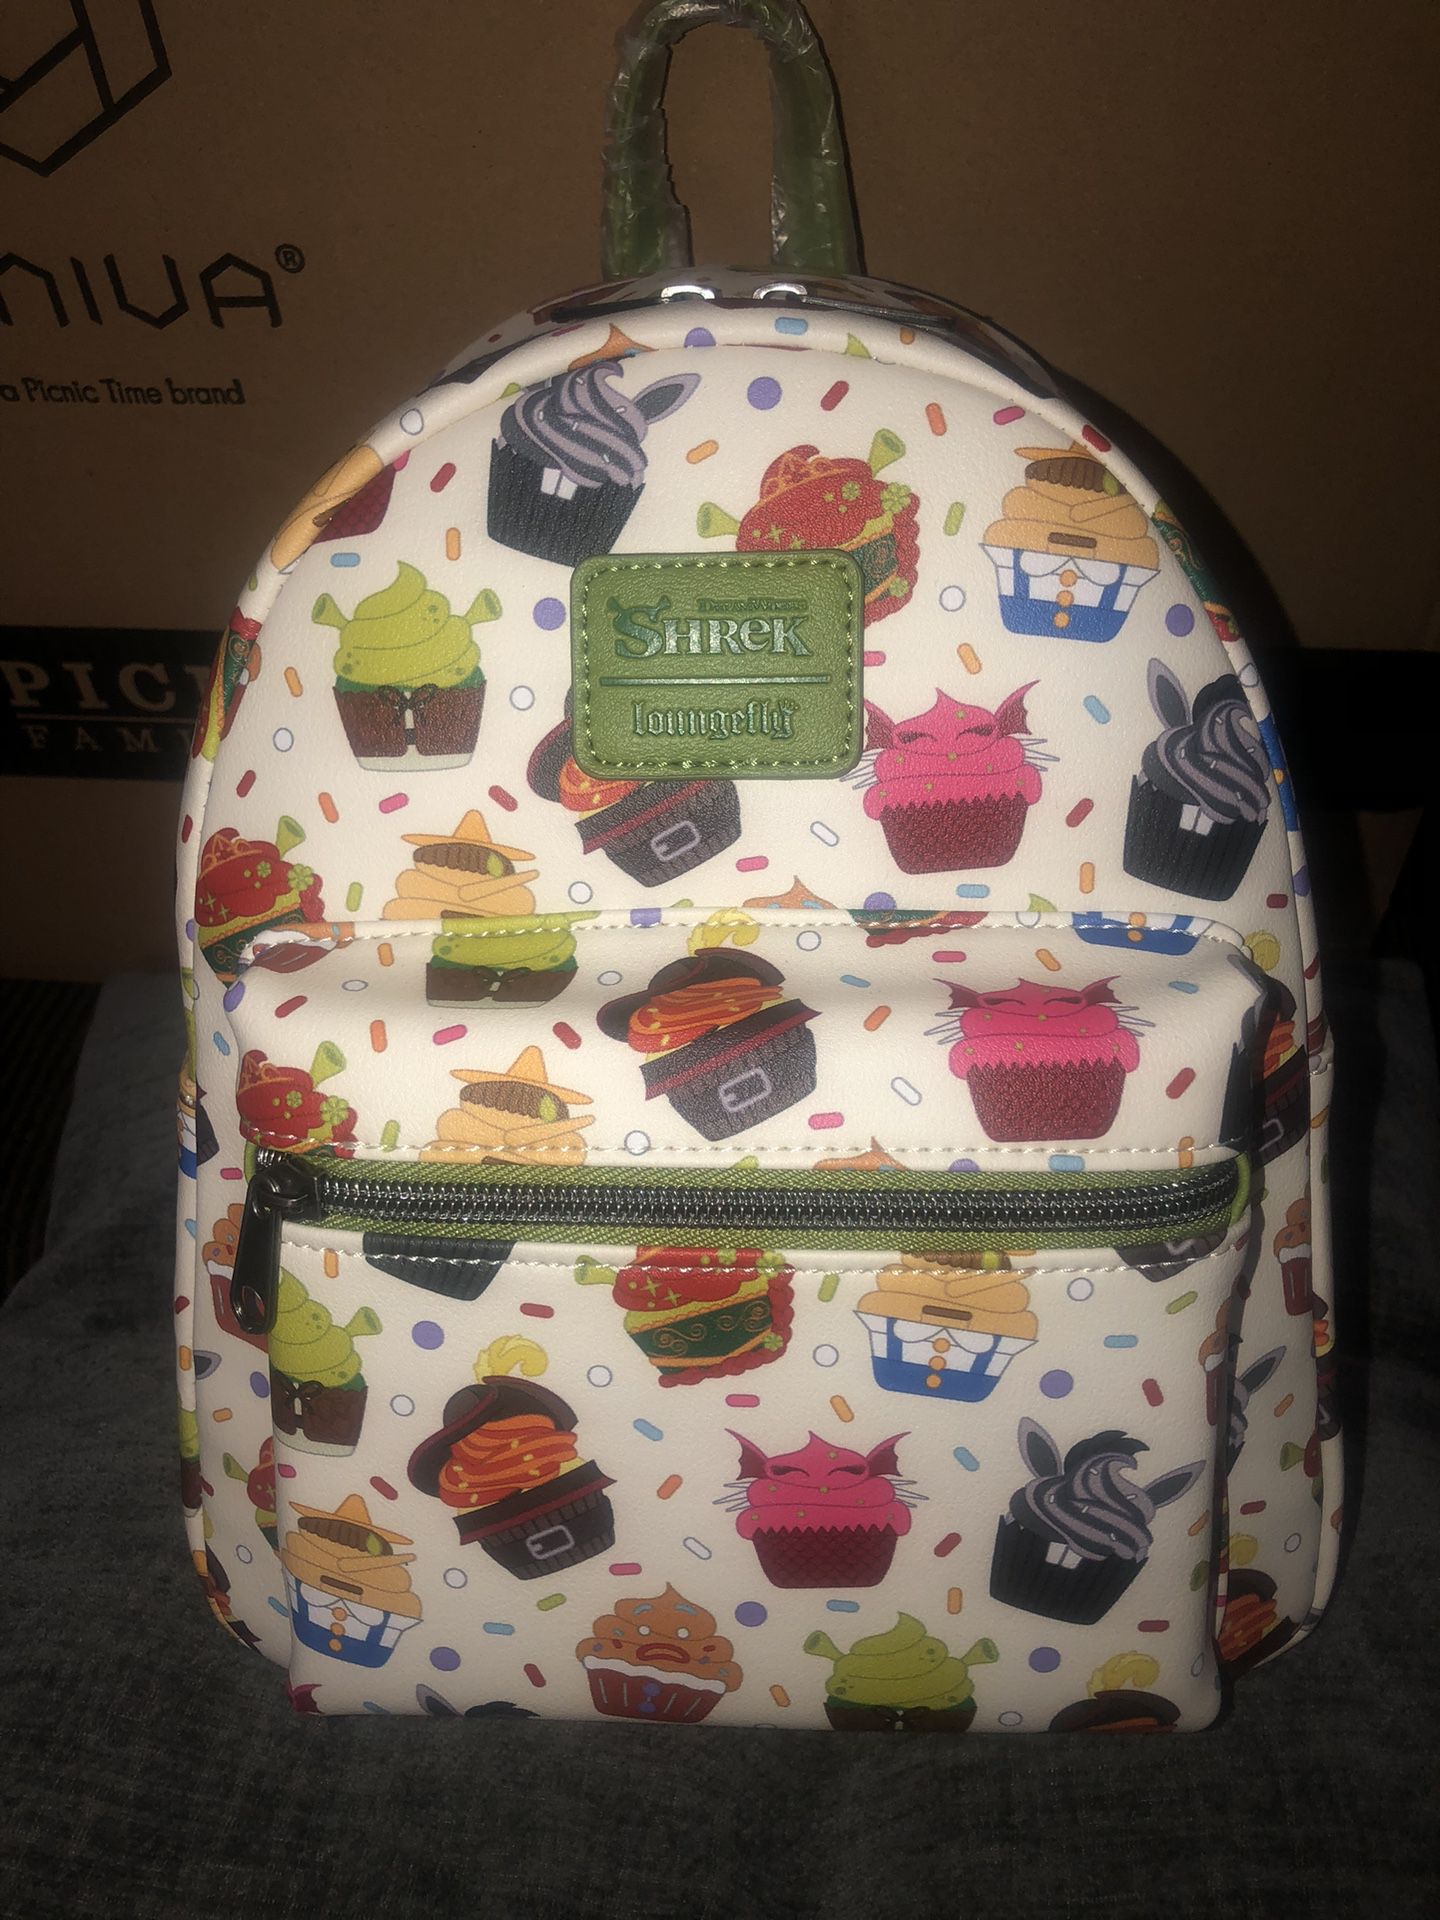 Shrek Cupcake Character Loungefly Bag